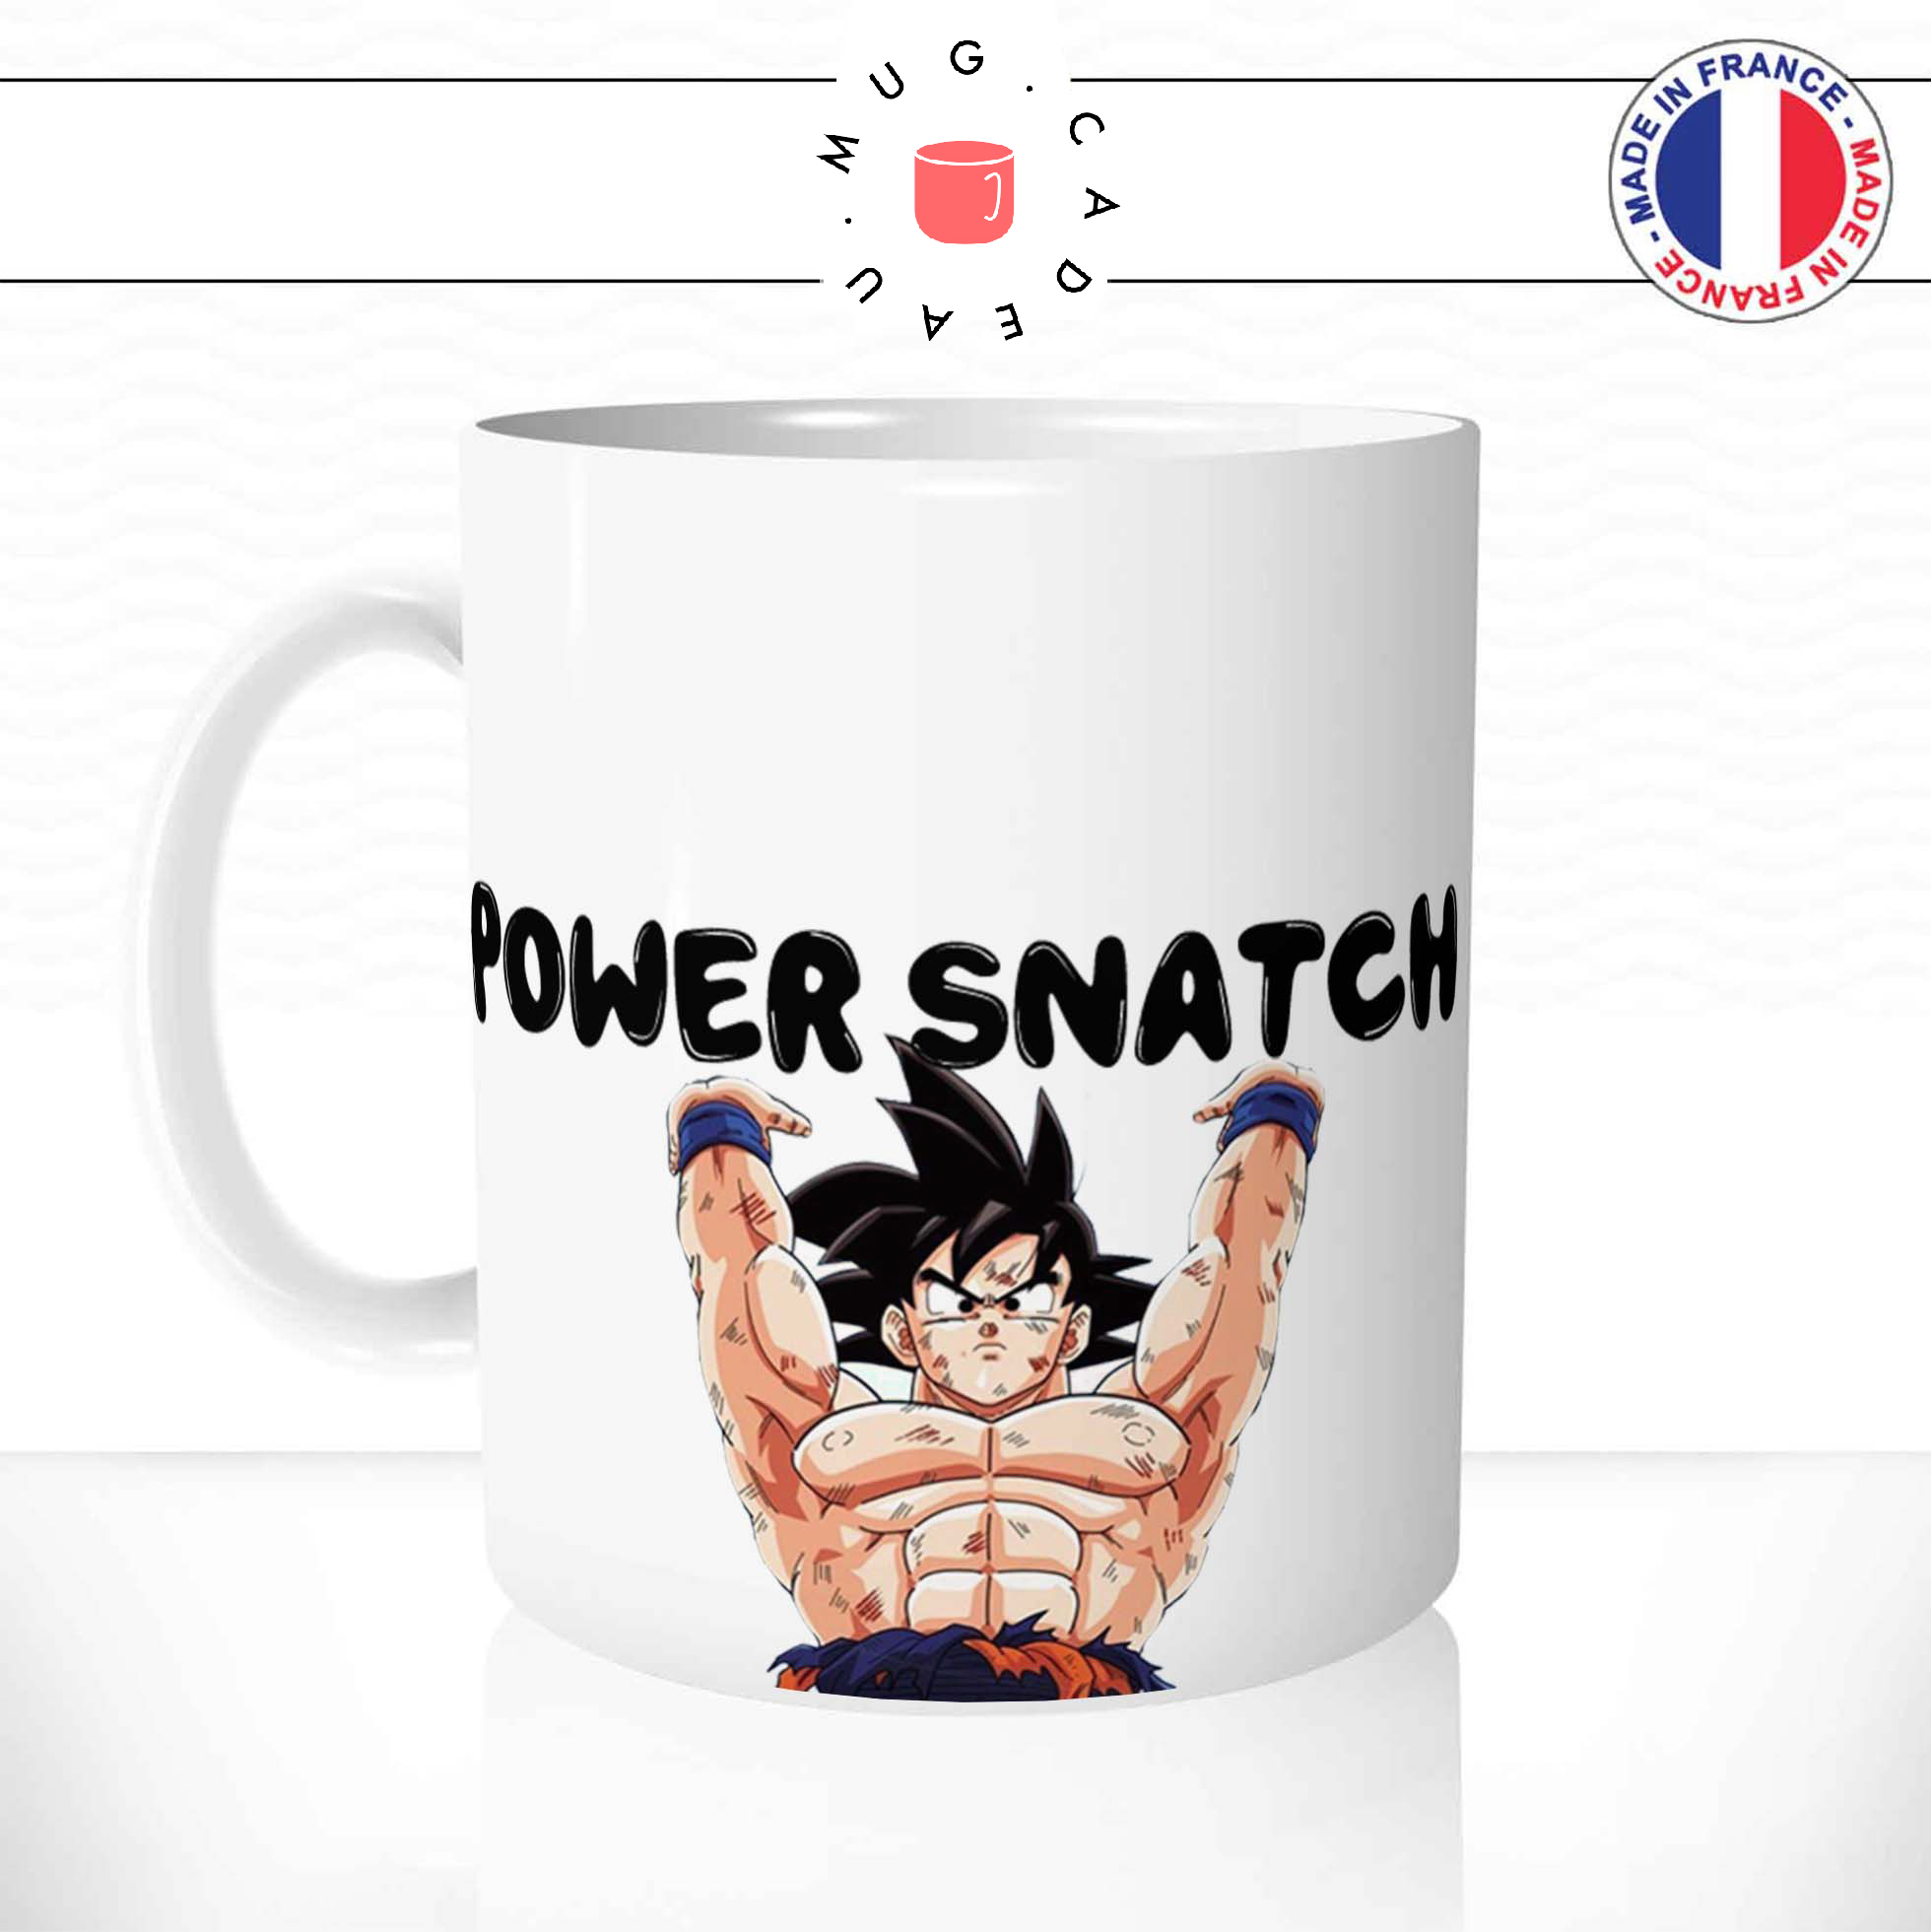 Mug Power Snatch